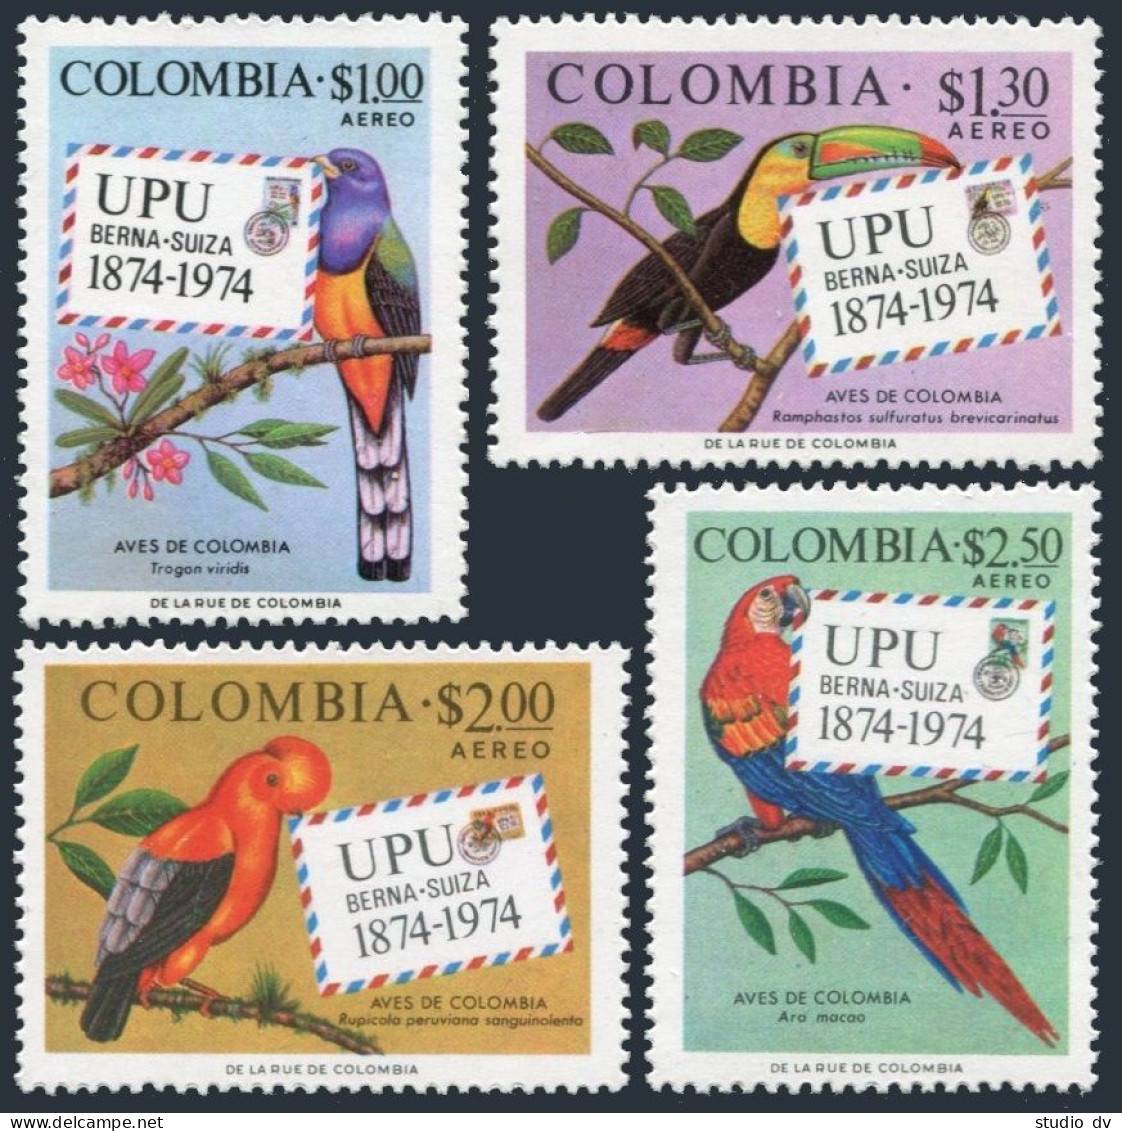 Colombia C611-C614, MNH. Michel 1275-1278. UPU-100, 1984. Parrot. - Kolumbien